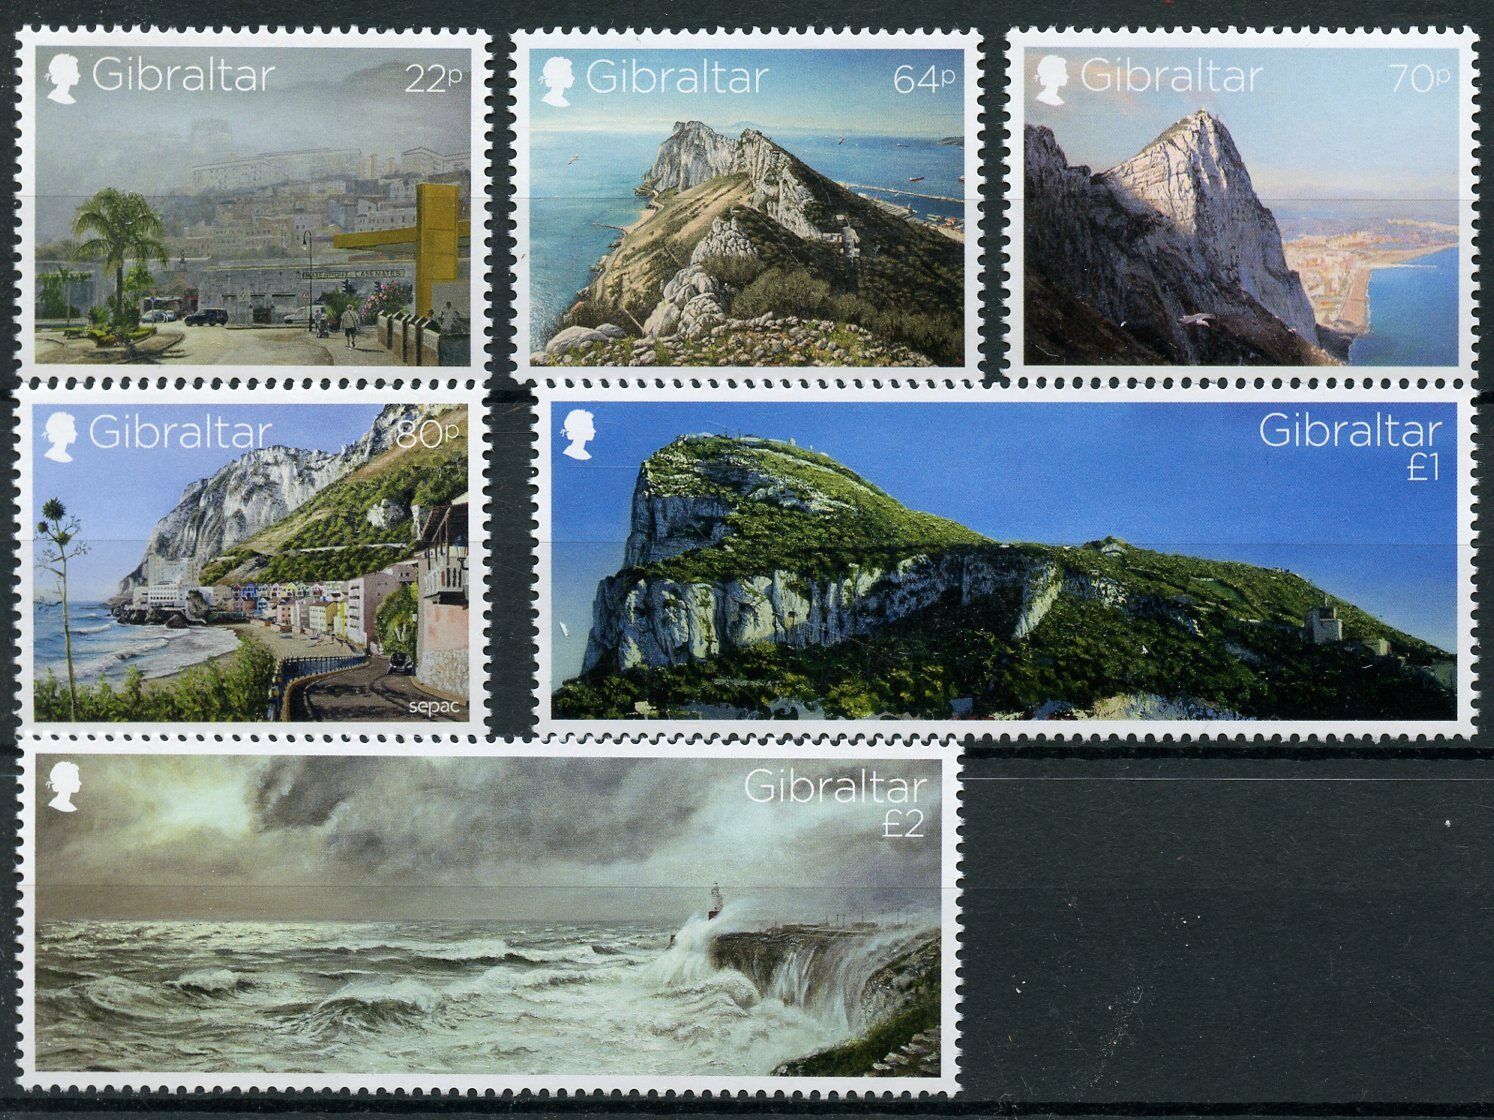 Gibraltar 2018 MNH Views from Rock SEPAC 6v Set Landscapes Mountains Stamps